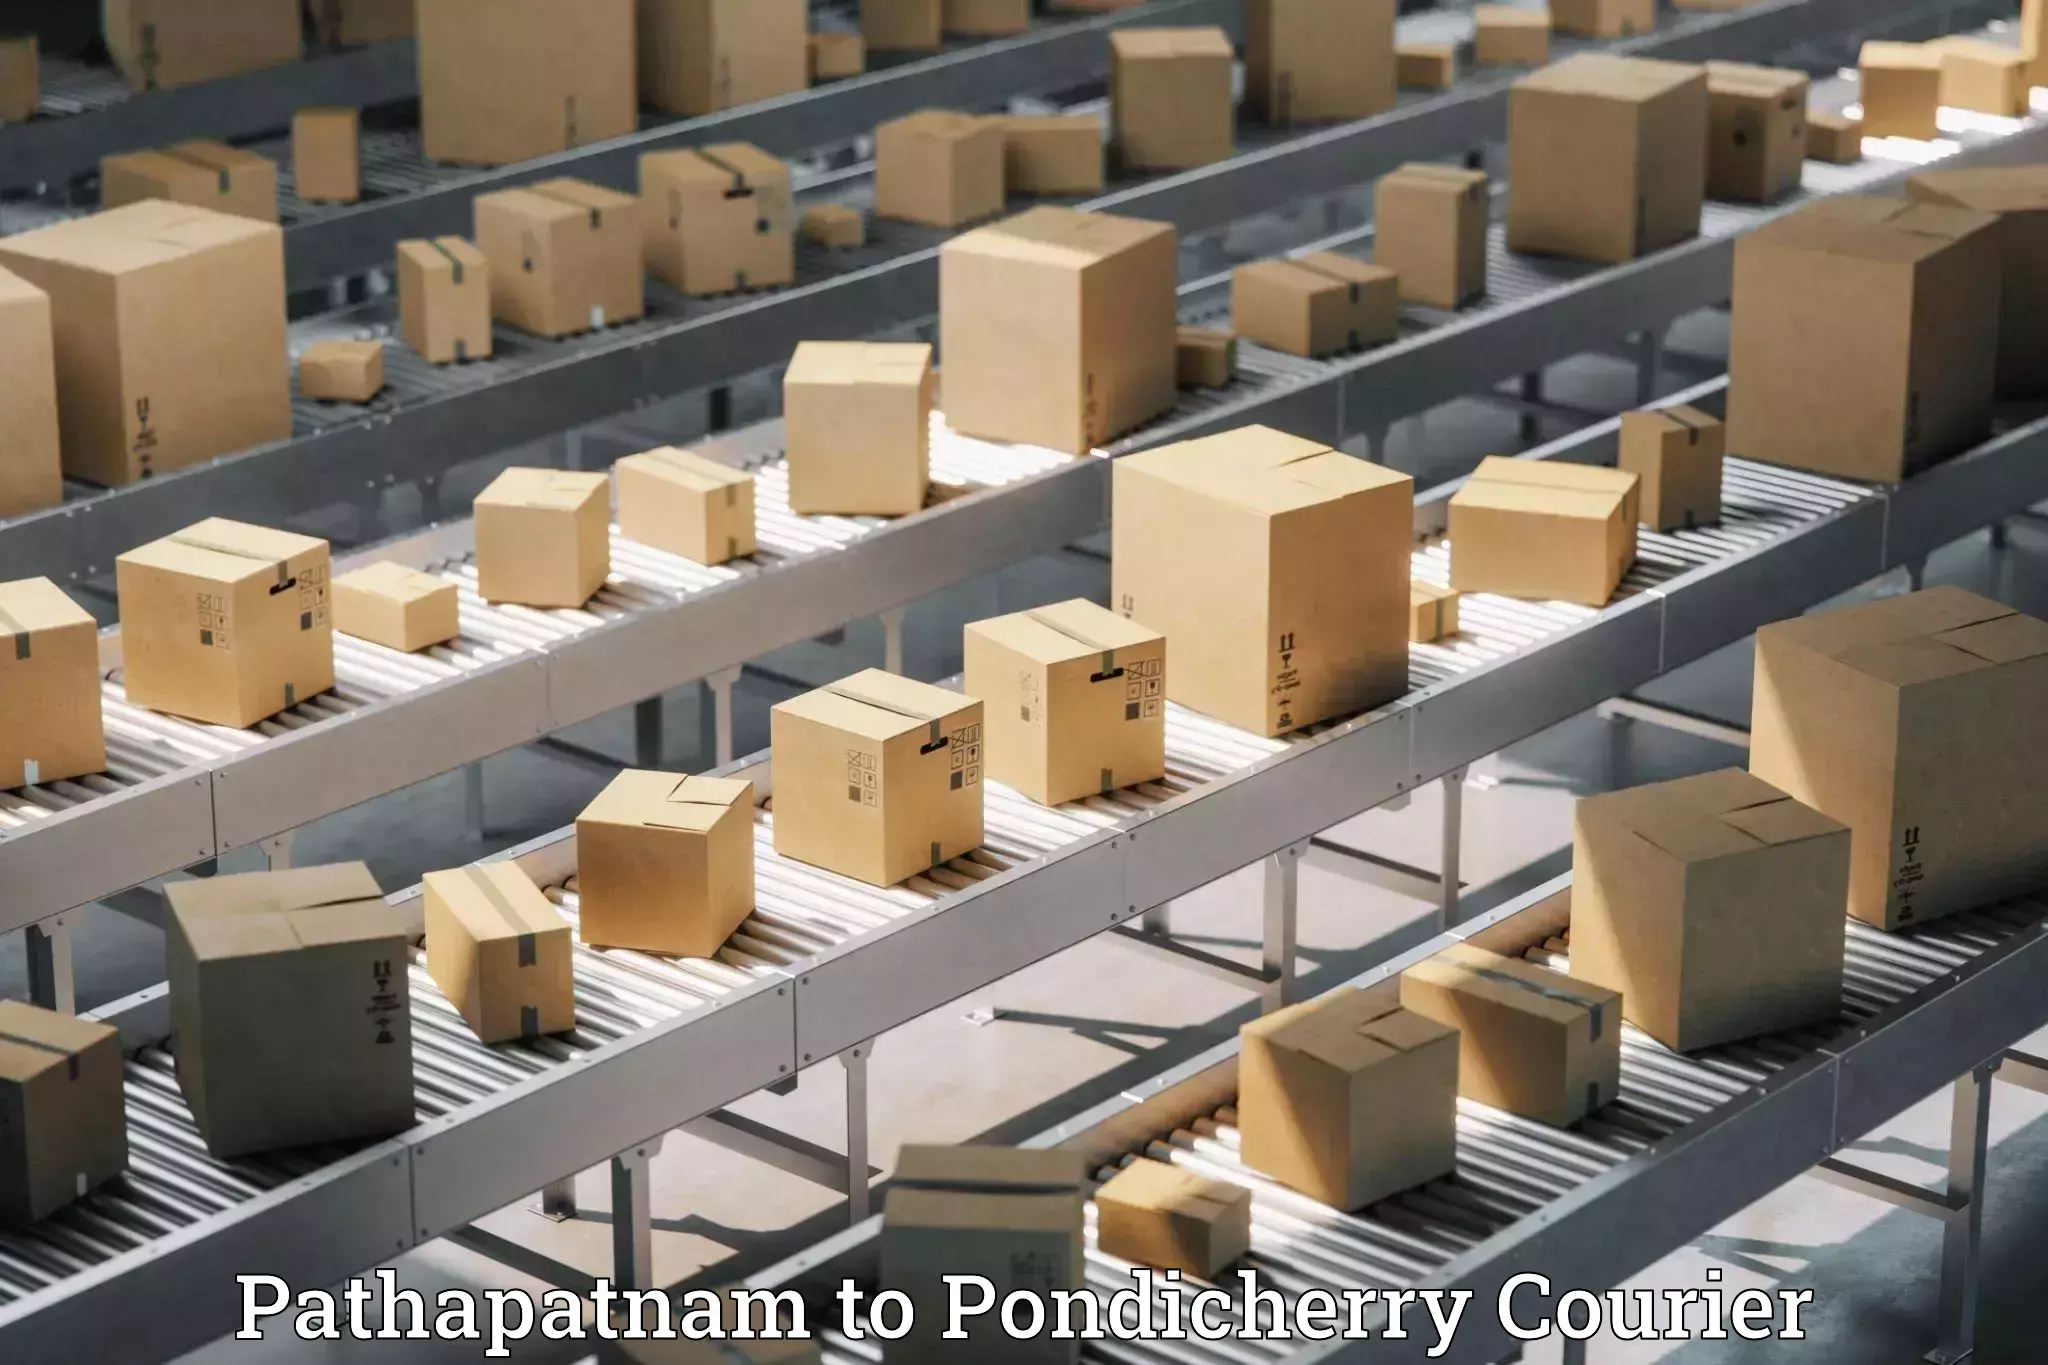 Courier service comparison Pathapatnam to Pondicherry University